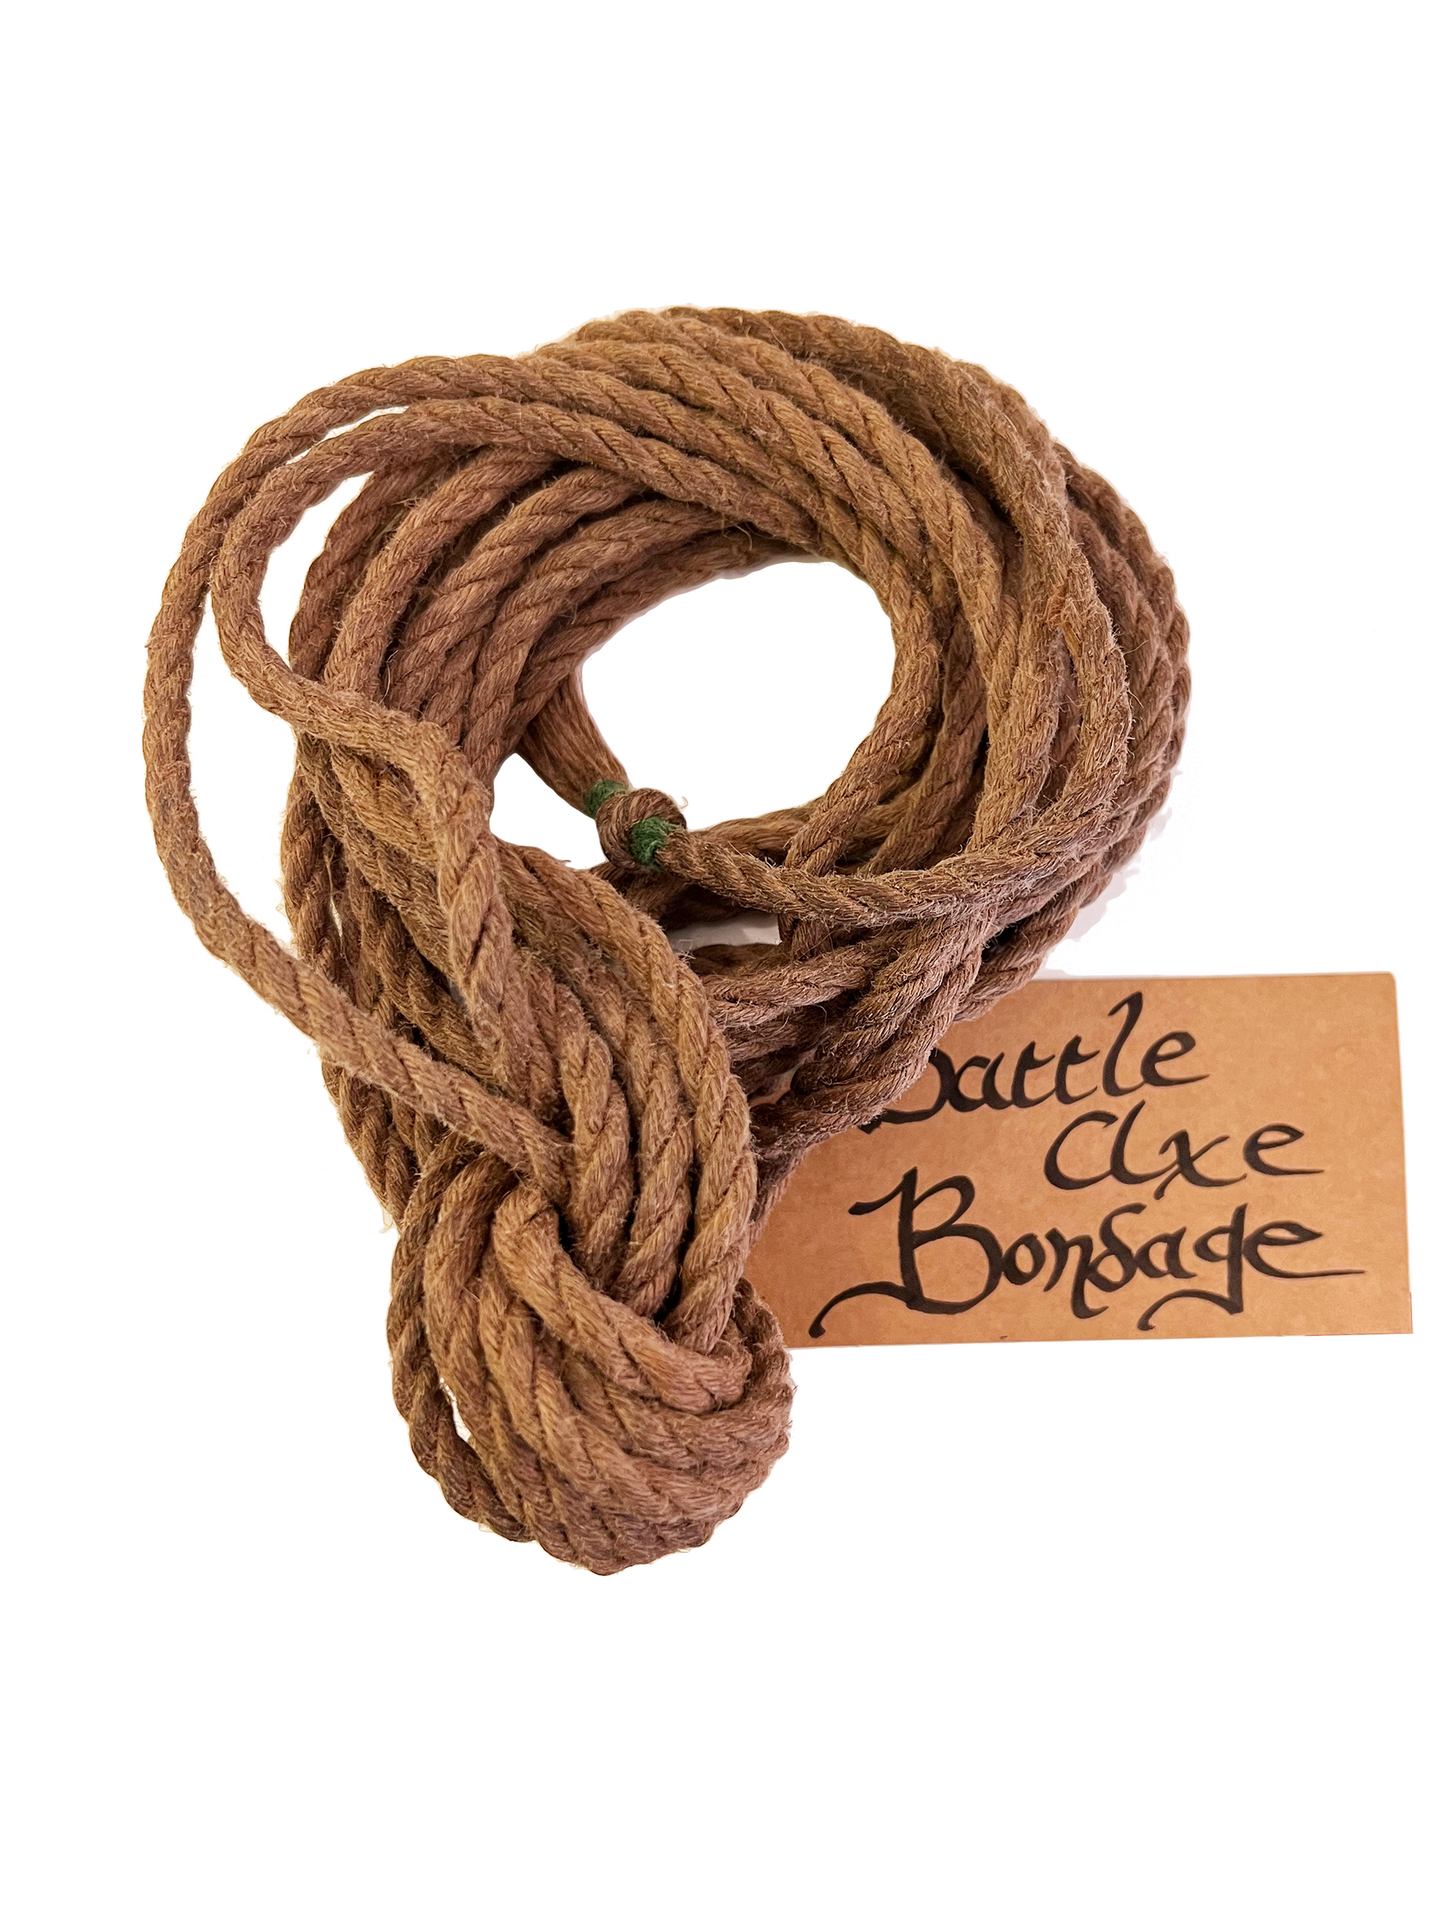 Battle Axe Jute Bondage Rope